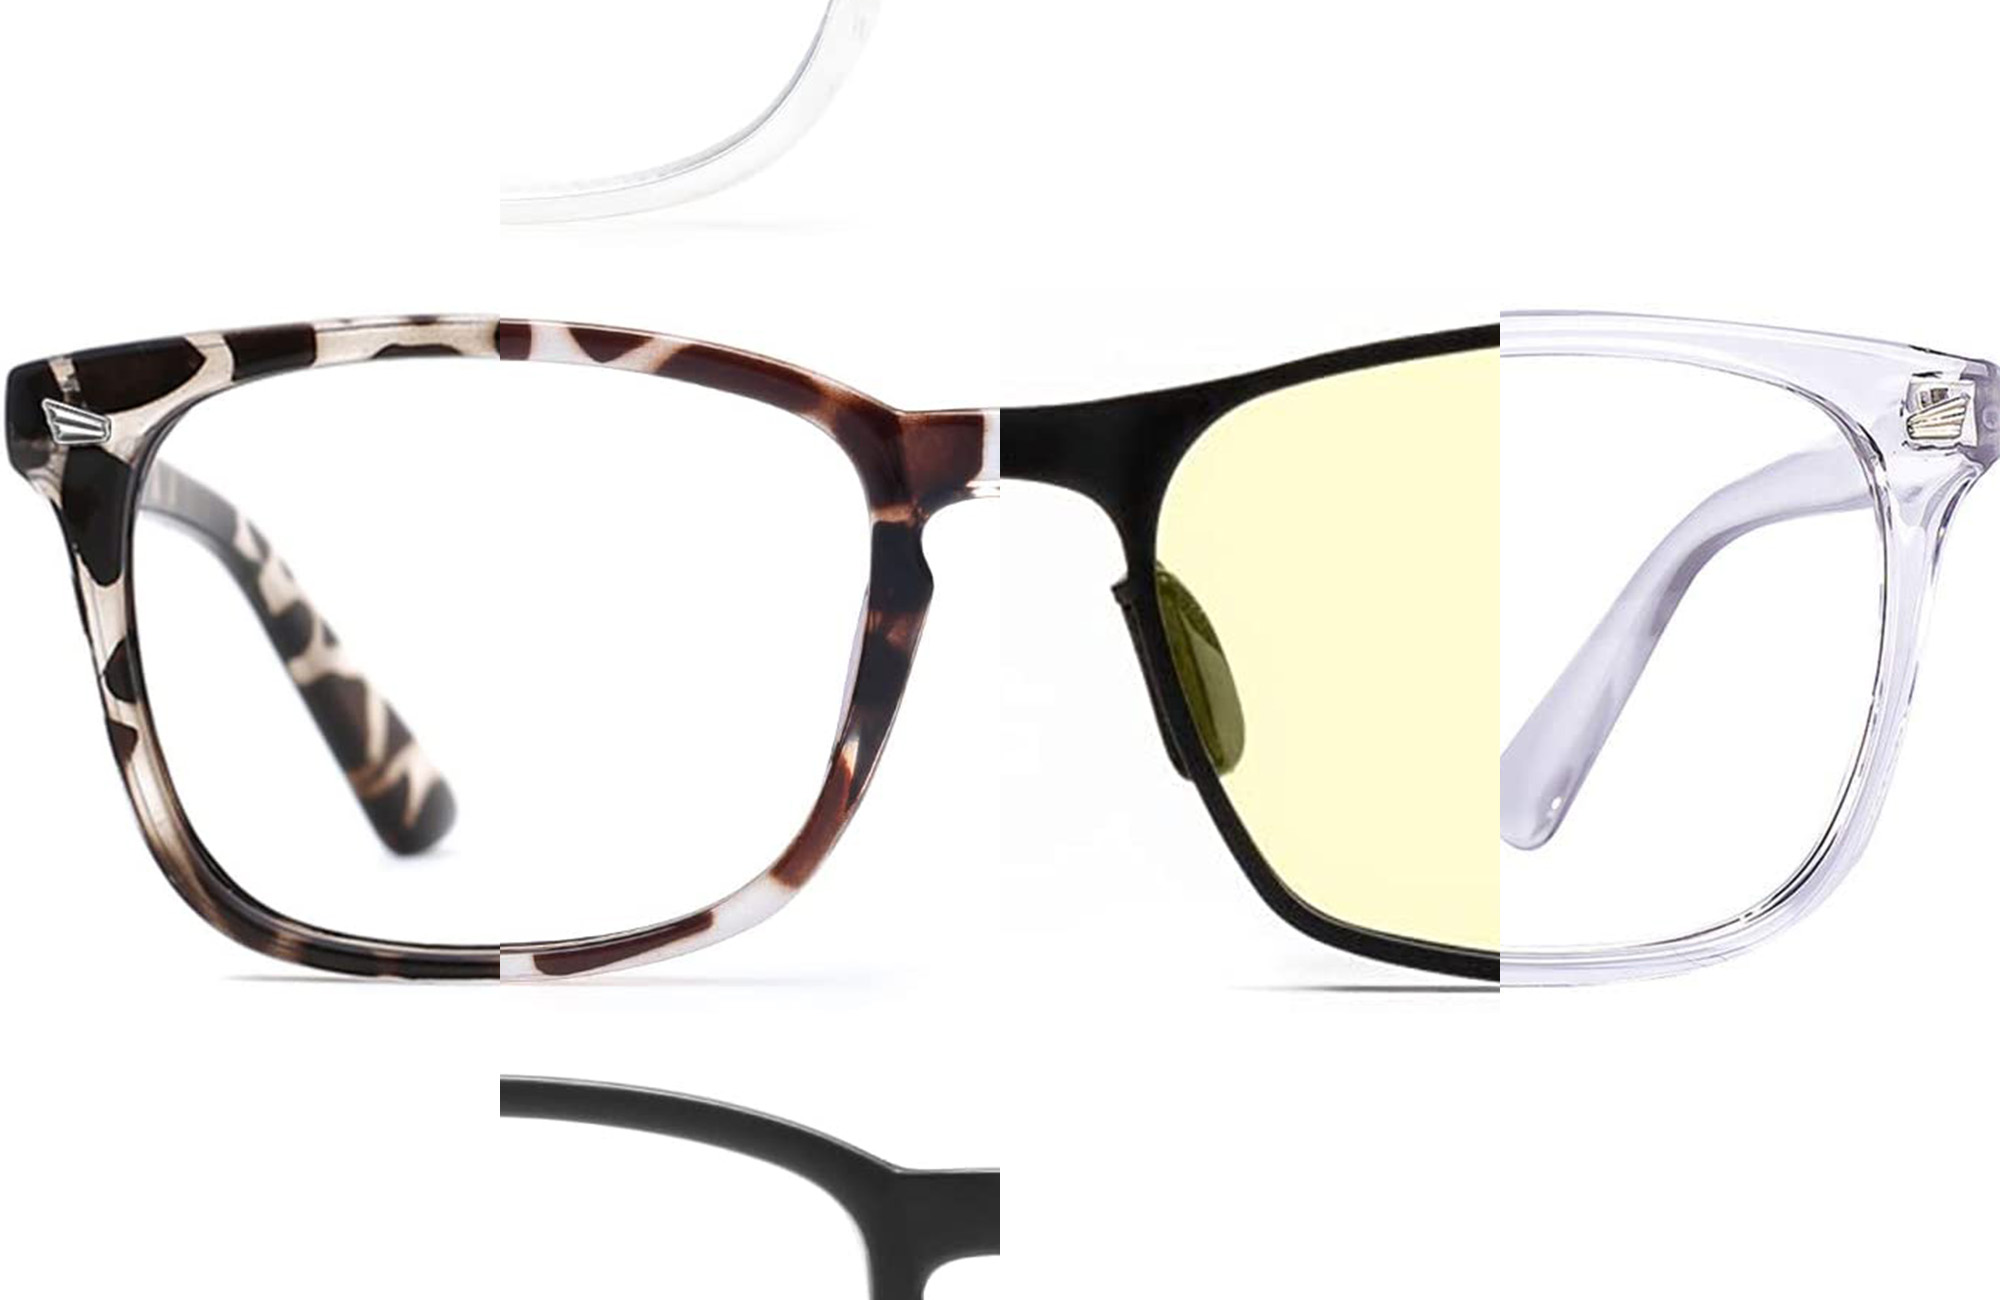 https://www.popsci.com/uploads/2021/06/30/best-blue-light-glasses.jpg?auto=webp&width=1440&height=936